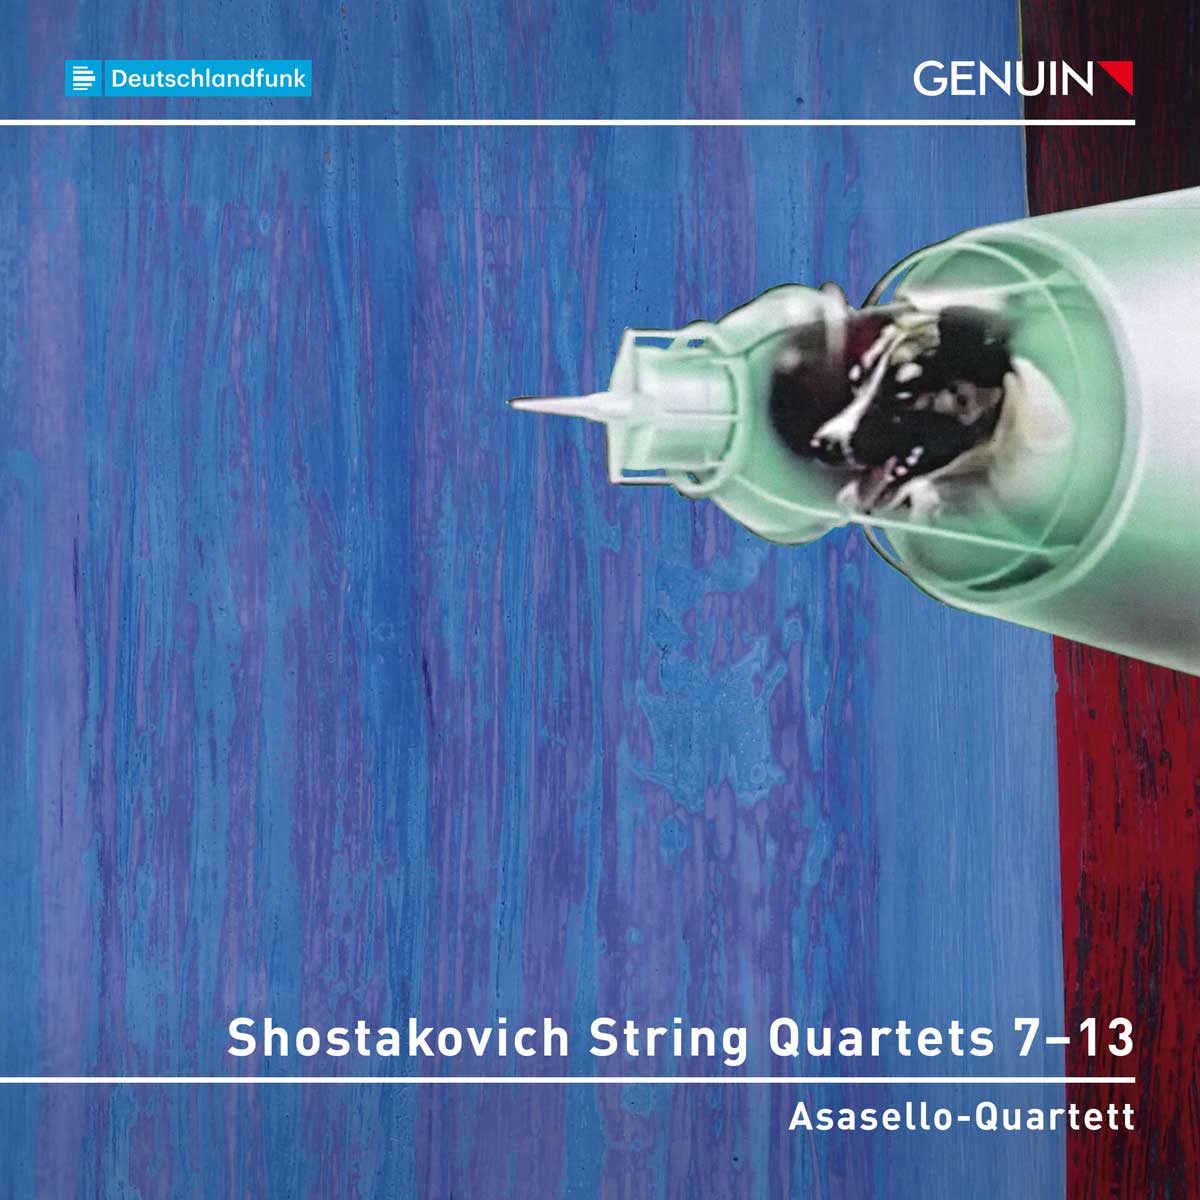 CD album cover 'Shostakovich String Quartets 713' (GEN 23826) with Asasello-Quartett